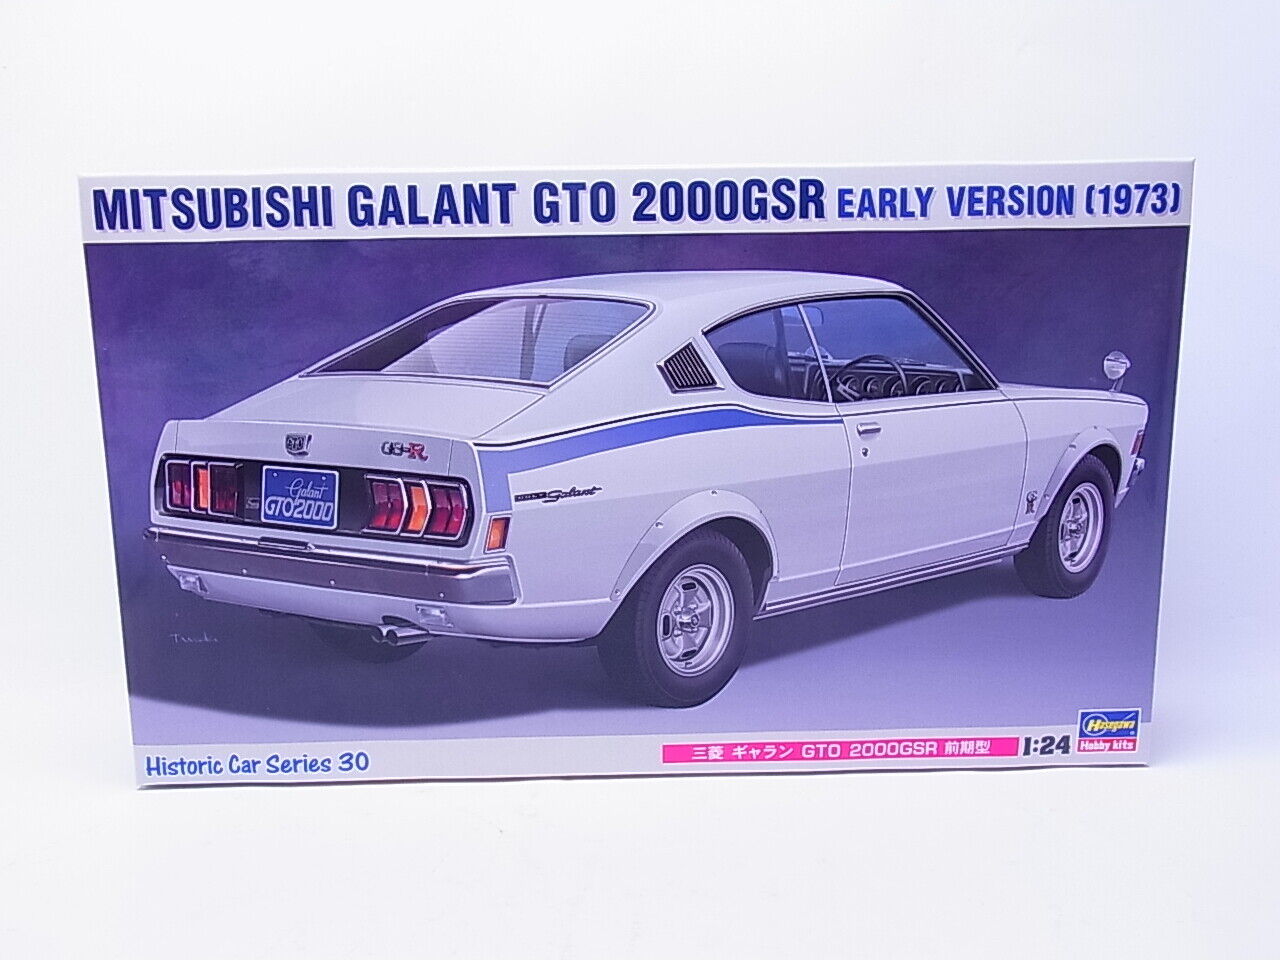 82909 hasegawa 21130 mitsubishi galant gto 2000gsr 1973 kit 1:24 new packaging